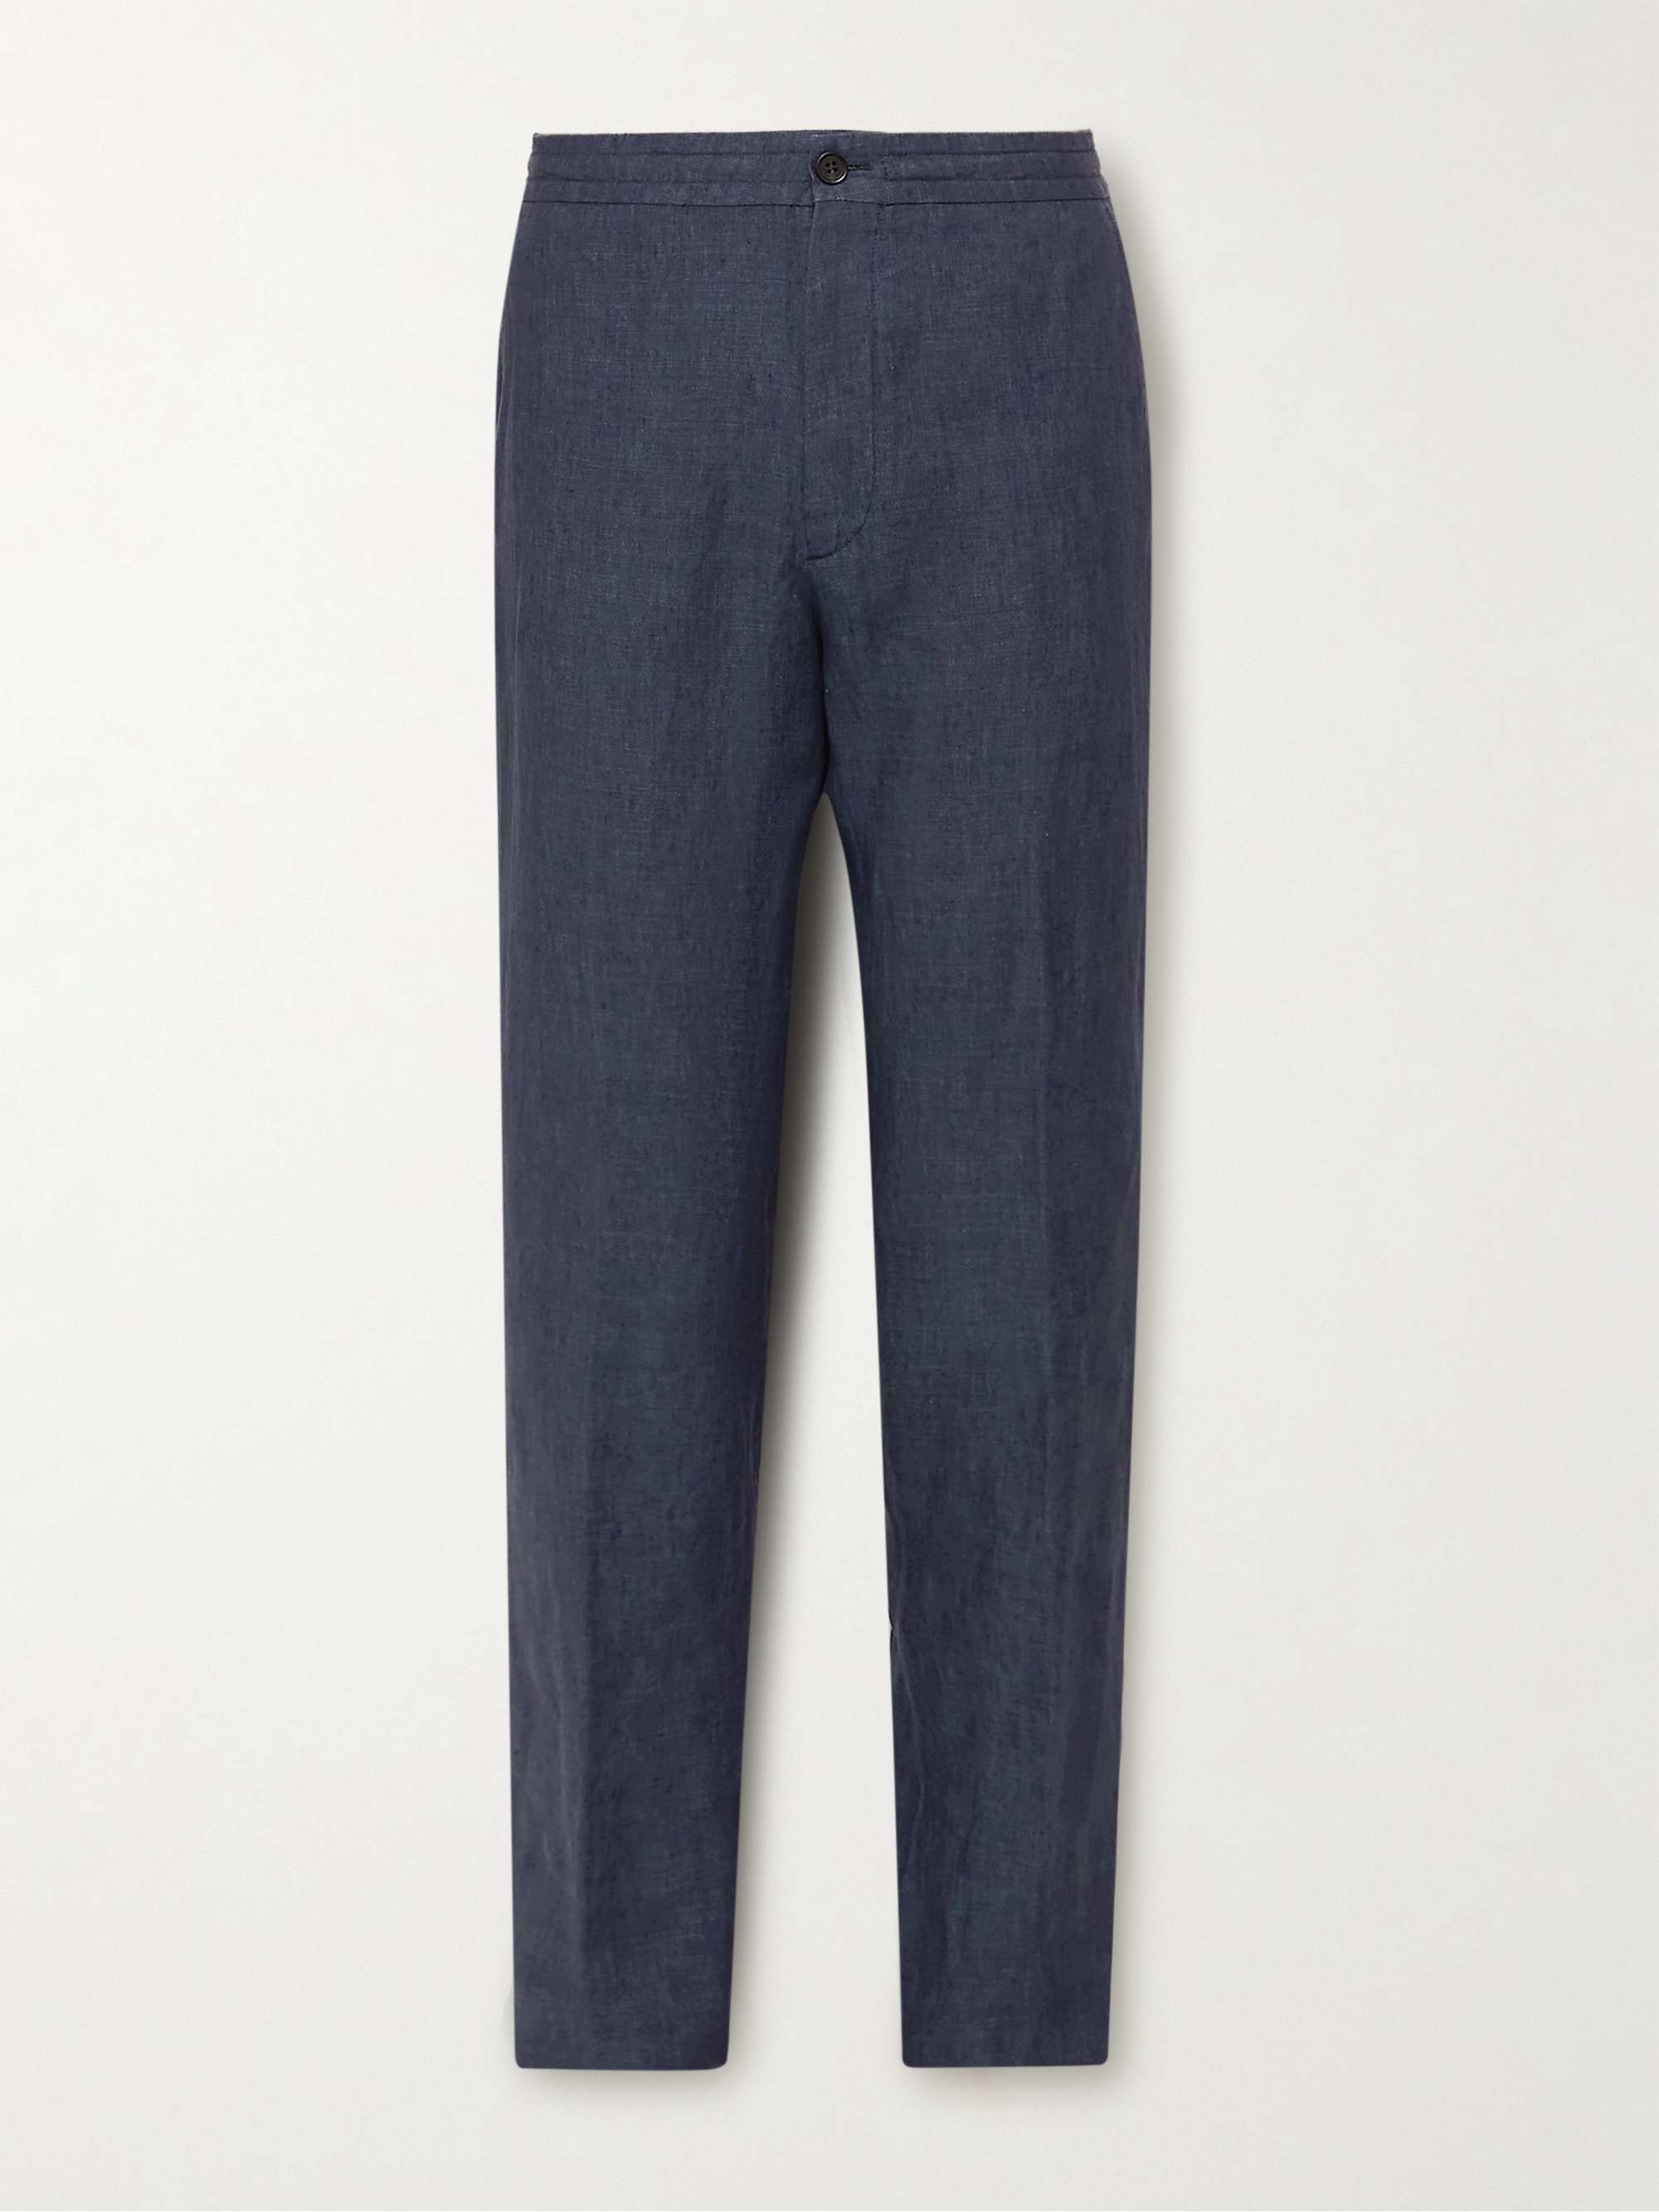 ZEGNA Slim-Fit Linen Trousers